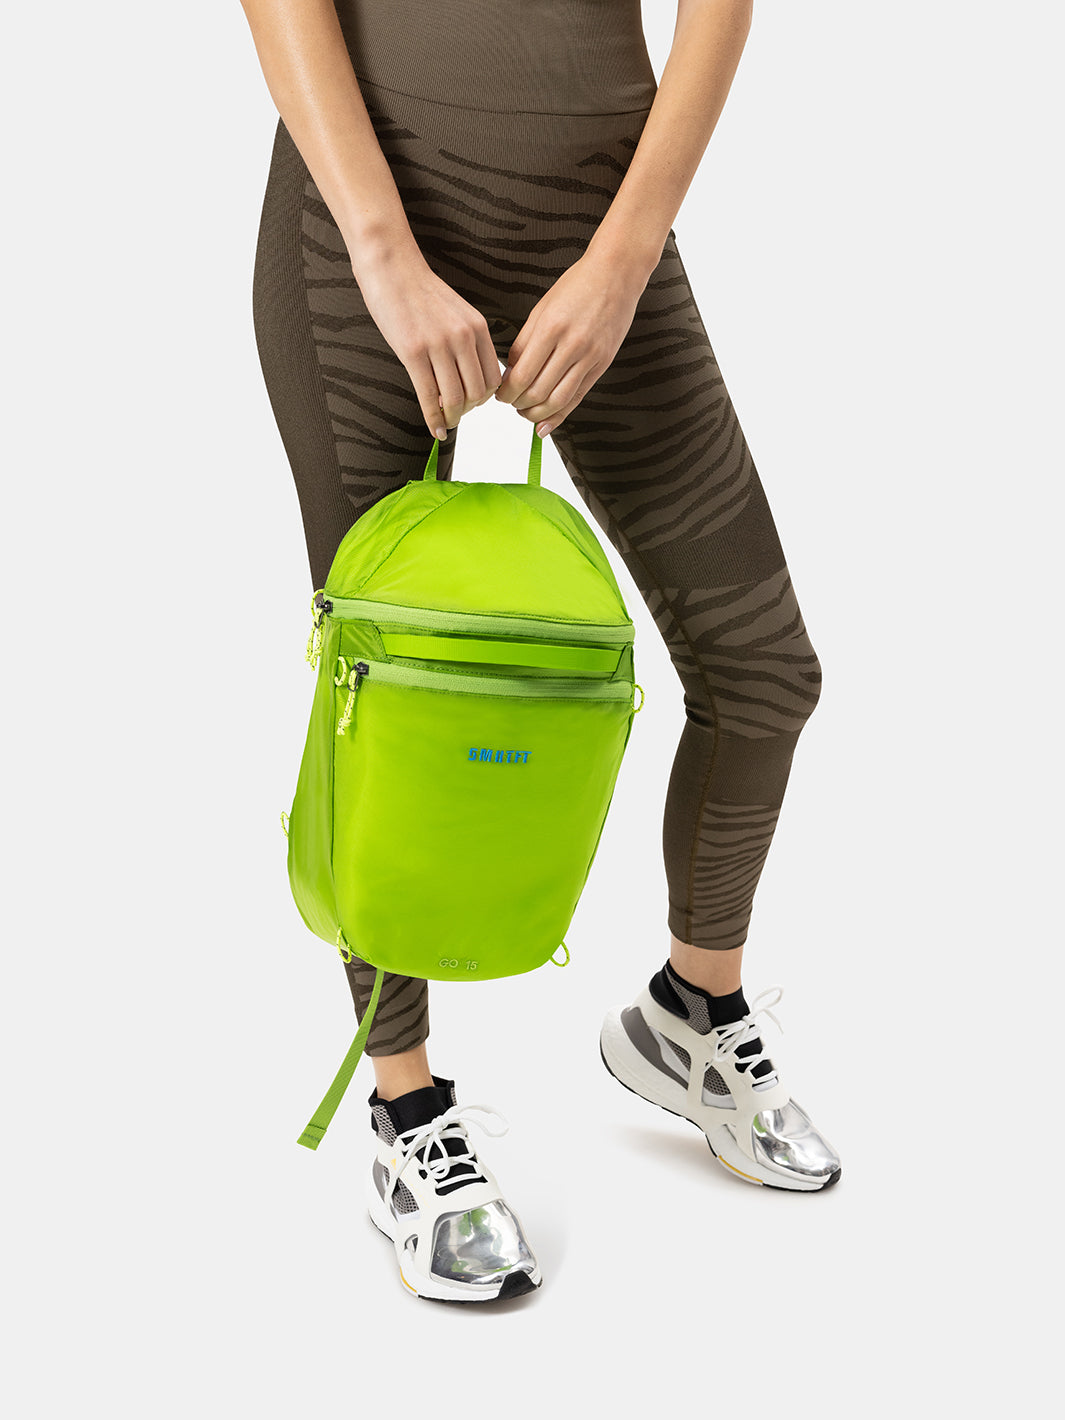 Green Backpack | Backpack For Women